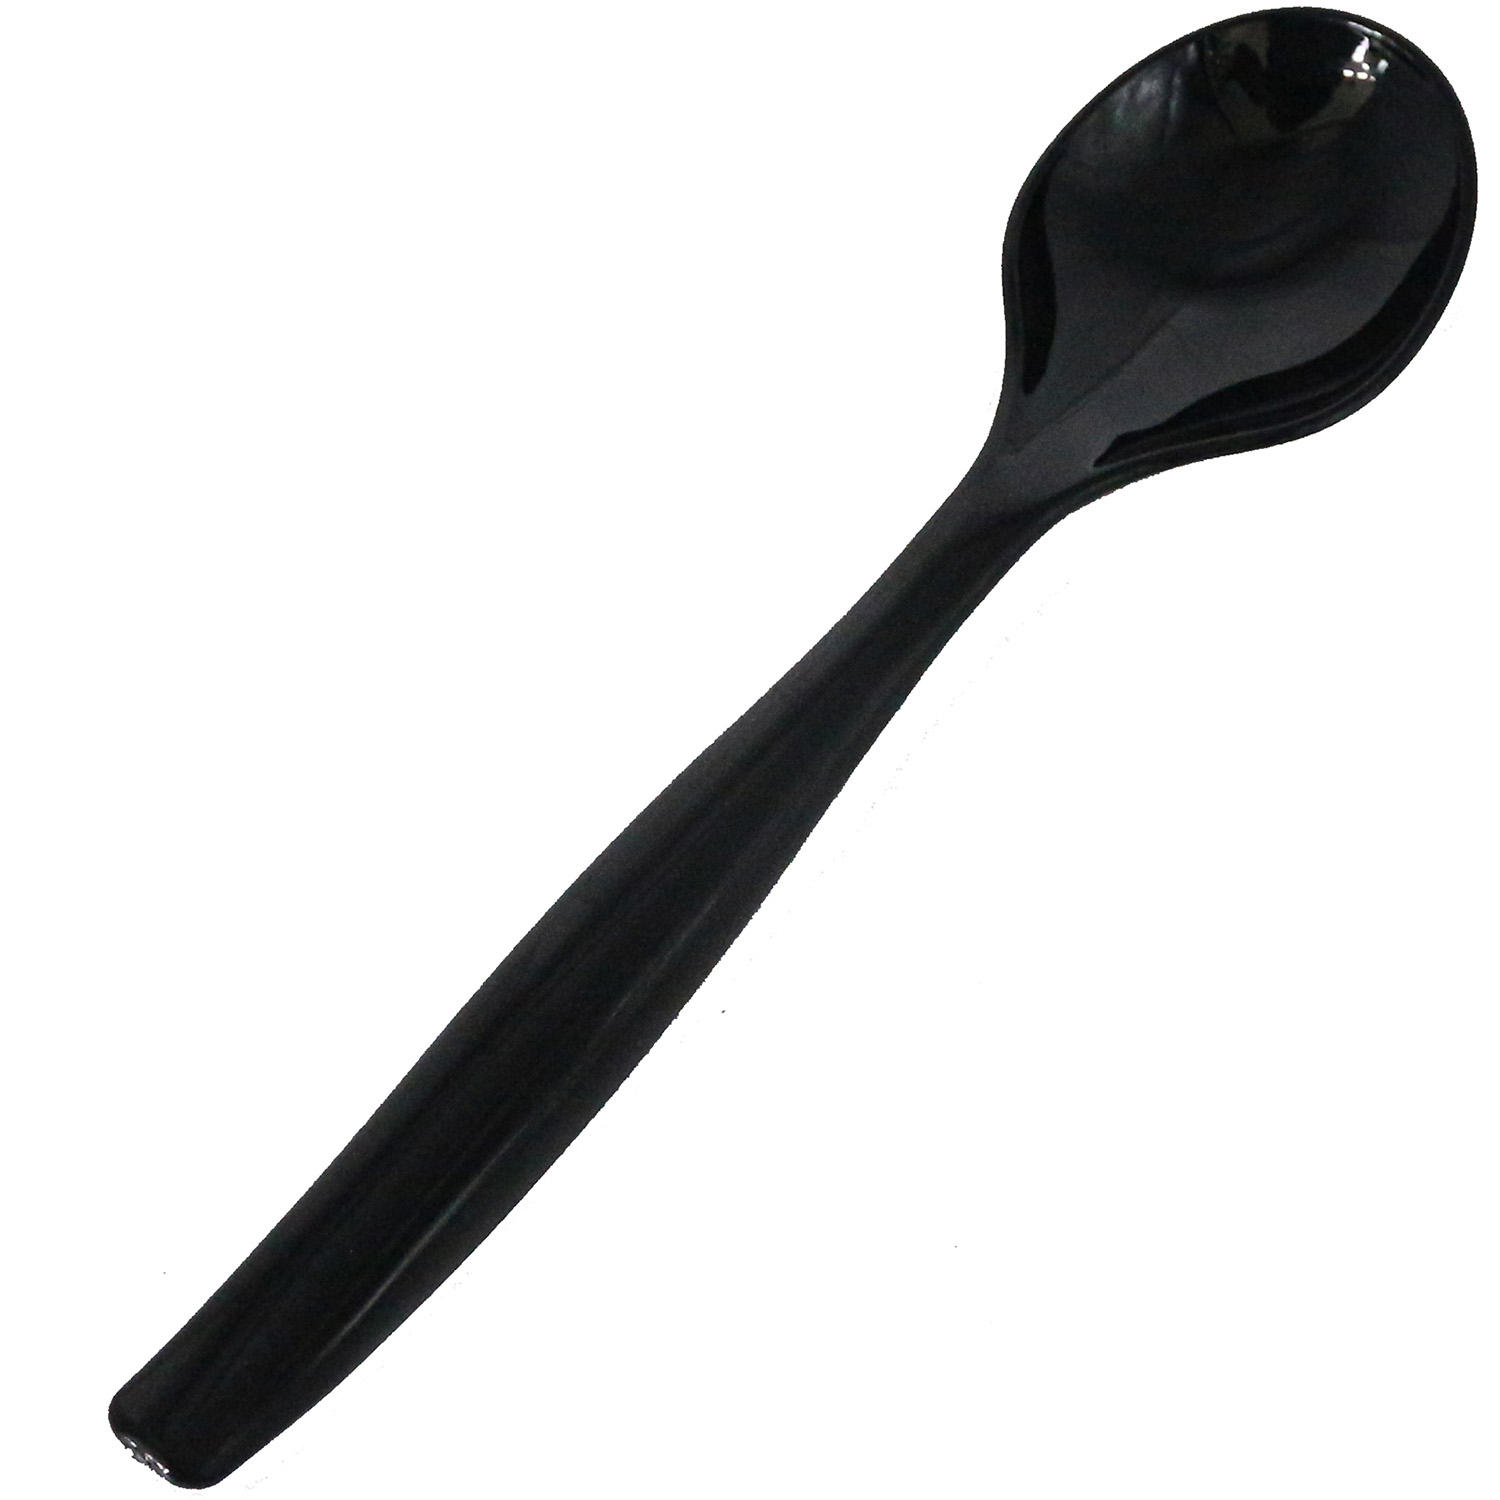 Member’s Mark Plastic Serving Spoons – 12 pc.